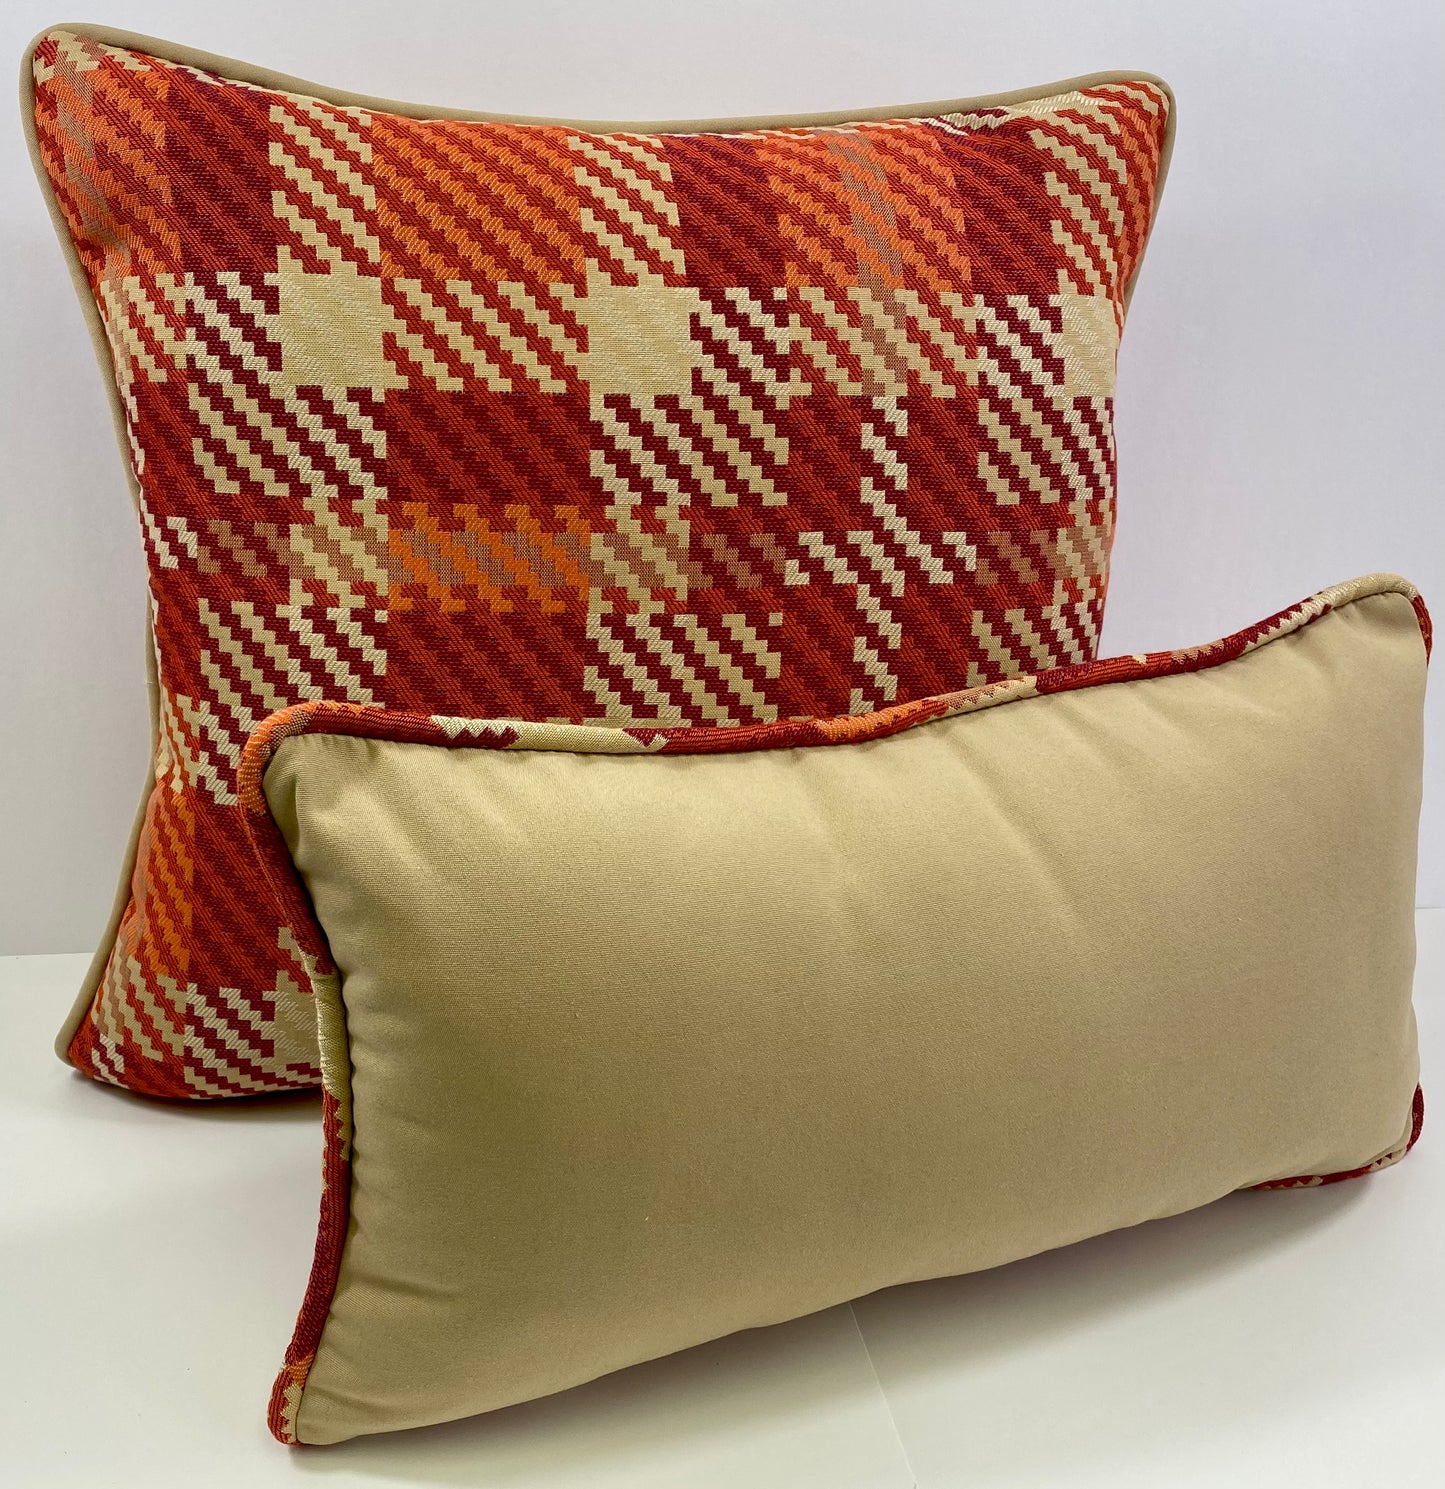 Luxury Outdoor Lumbar Pillow - 22" x 12" - Rancho Santa Fe-Tan; Sunbrella, or equivalent, fabric with poly fill